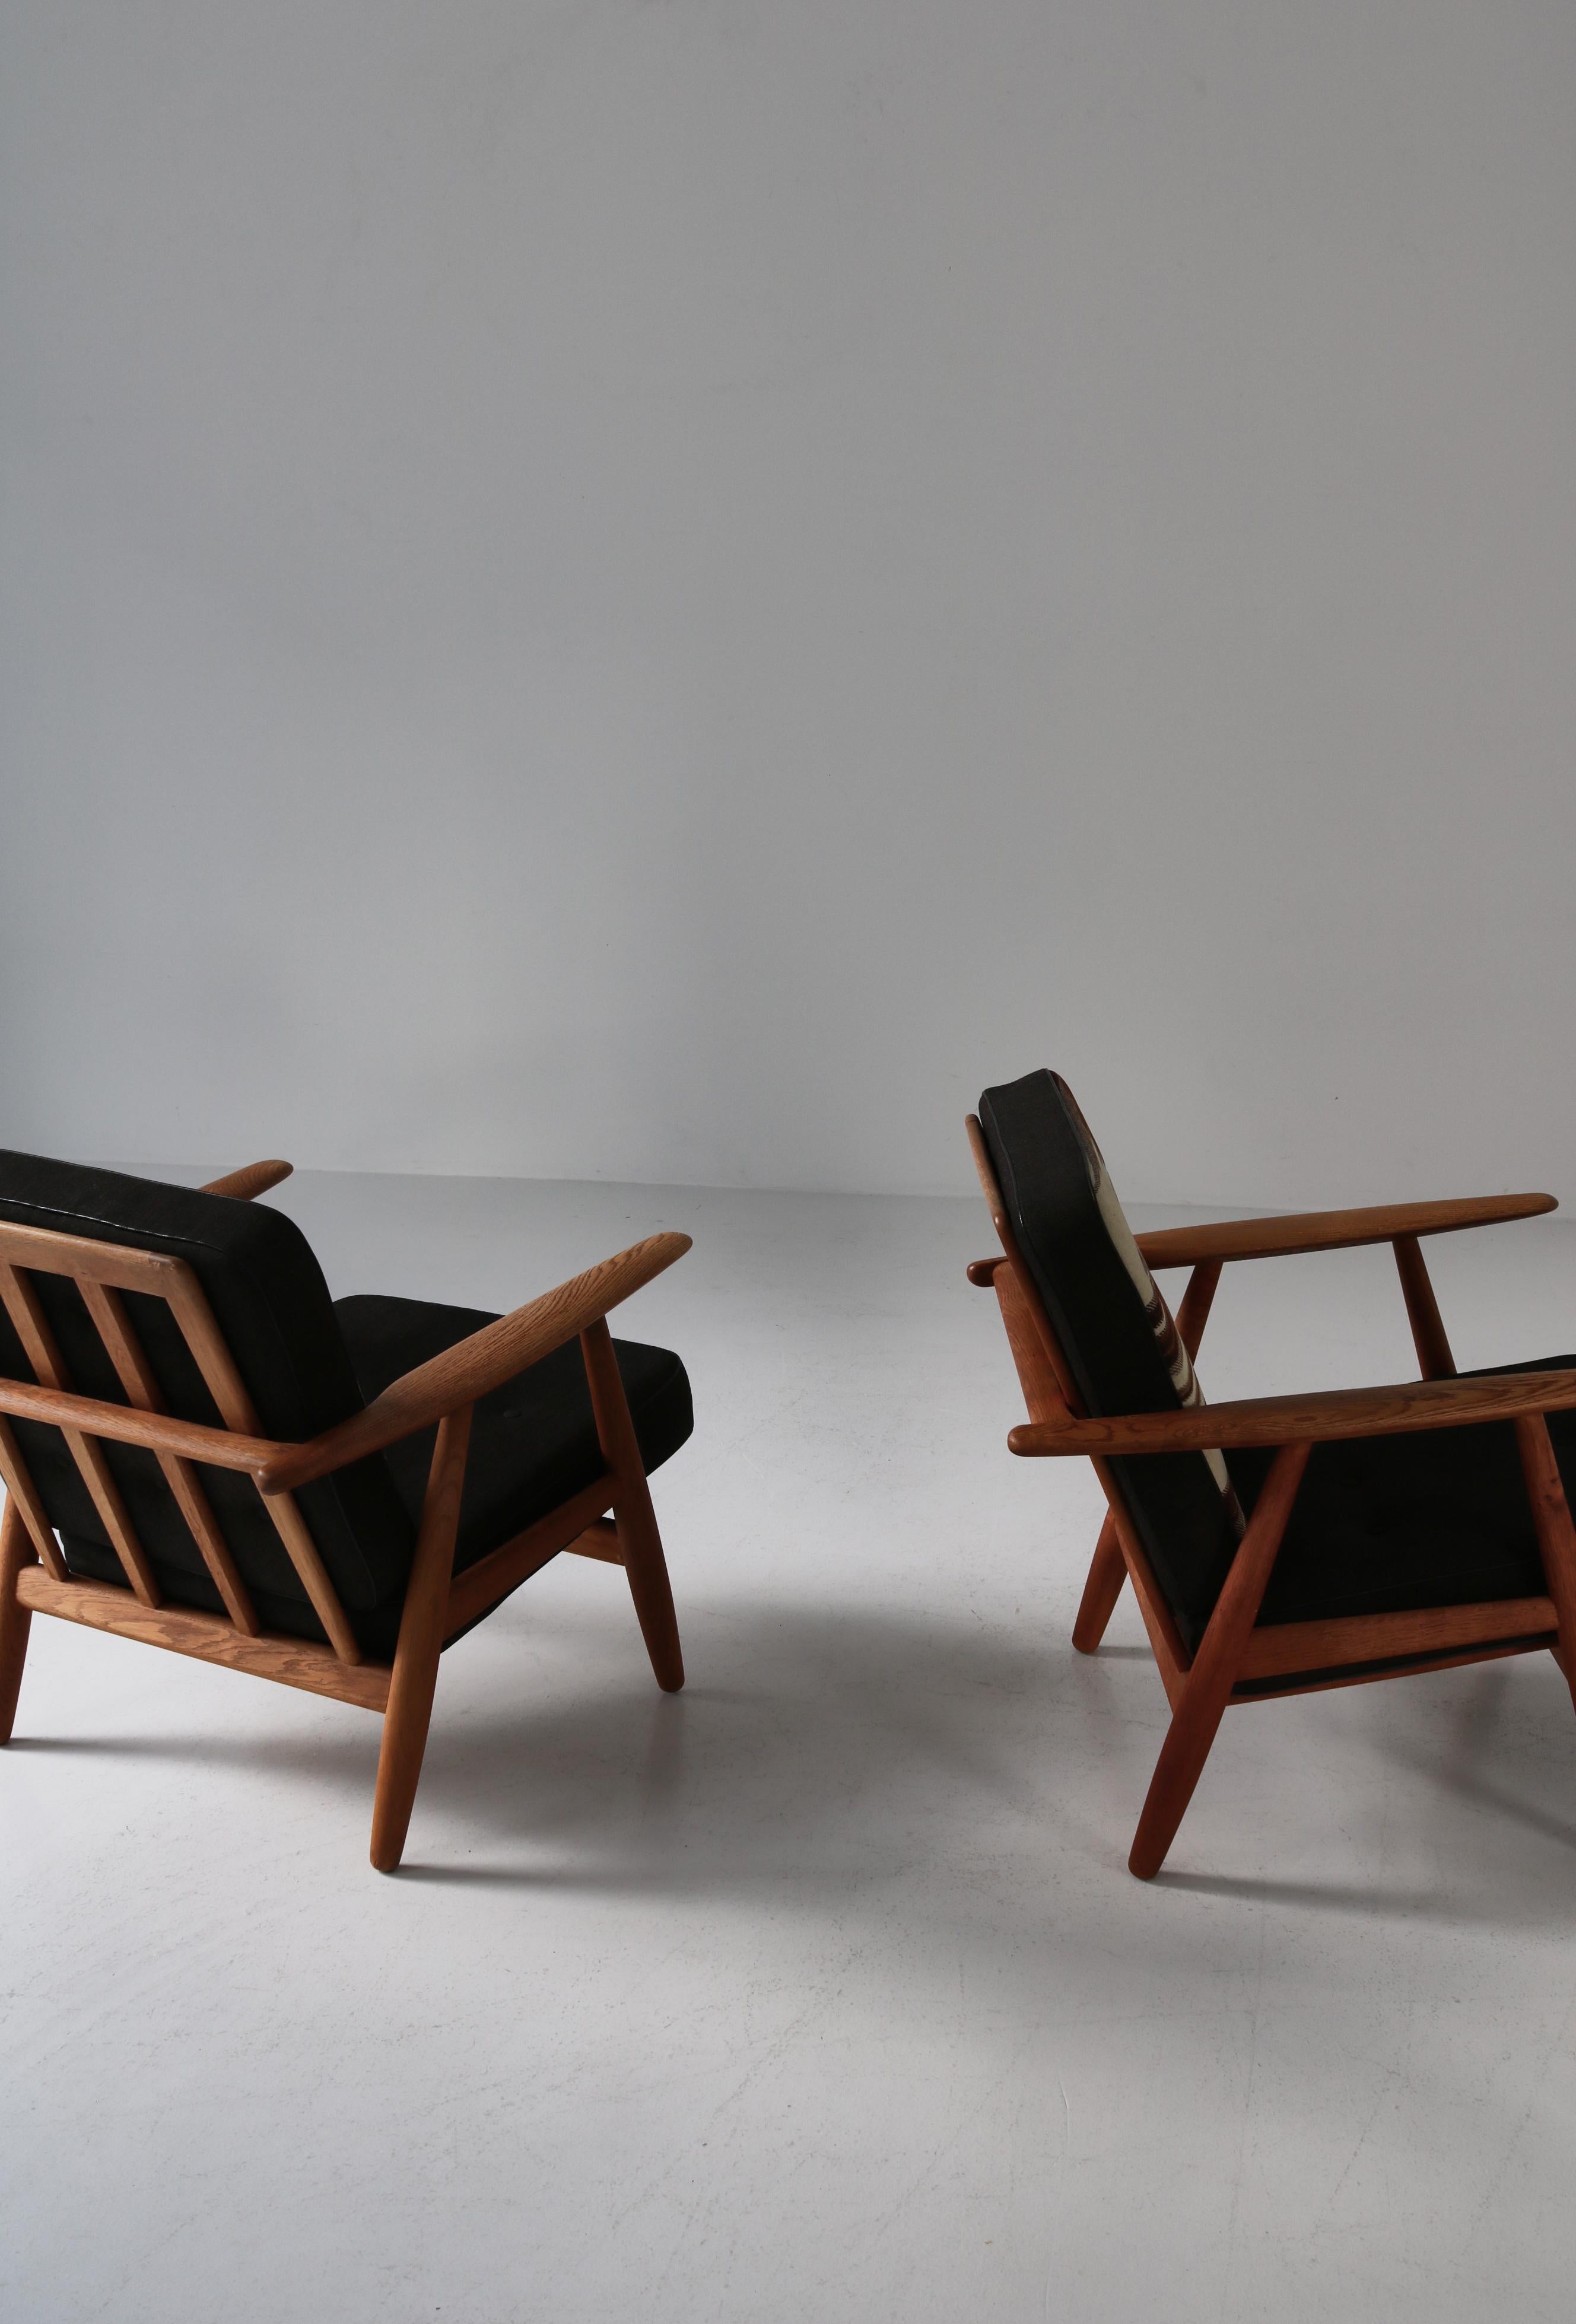 Hans J. Wegner fauteuils de salon modernes danois en chêne «GE-240 », GETAMA 1955 en vente 6